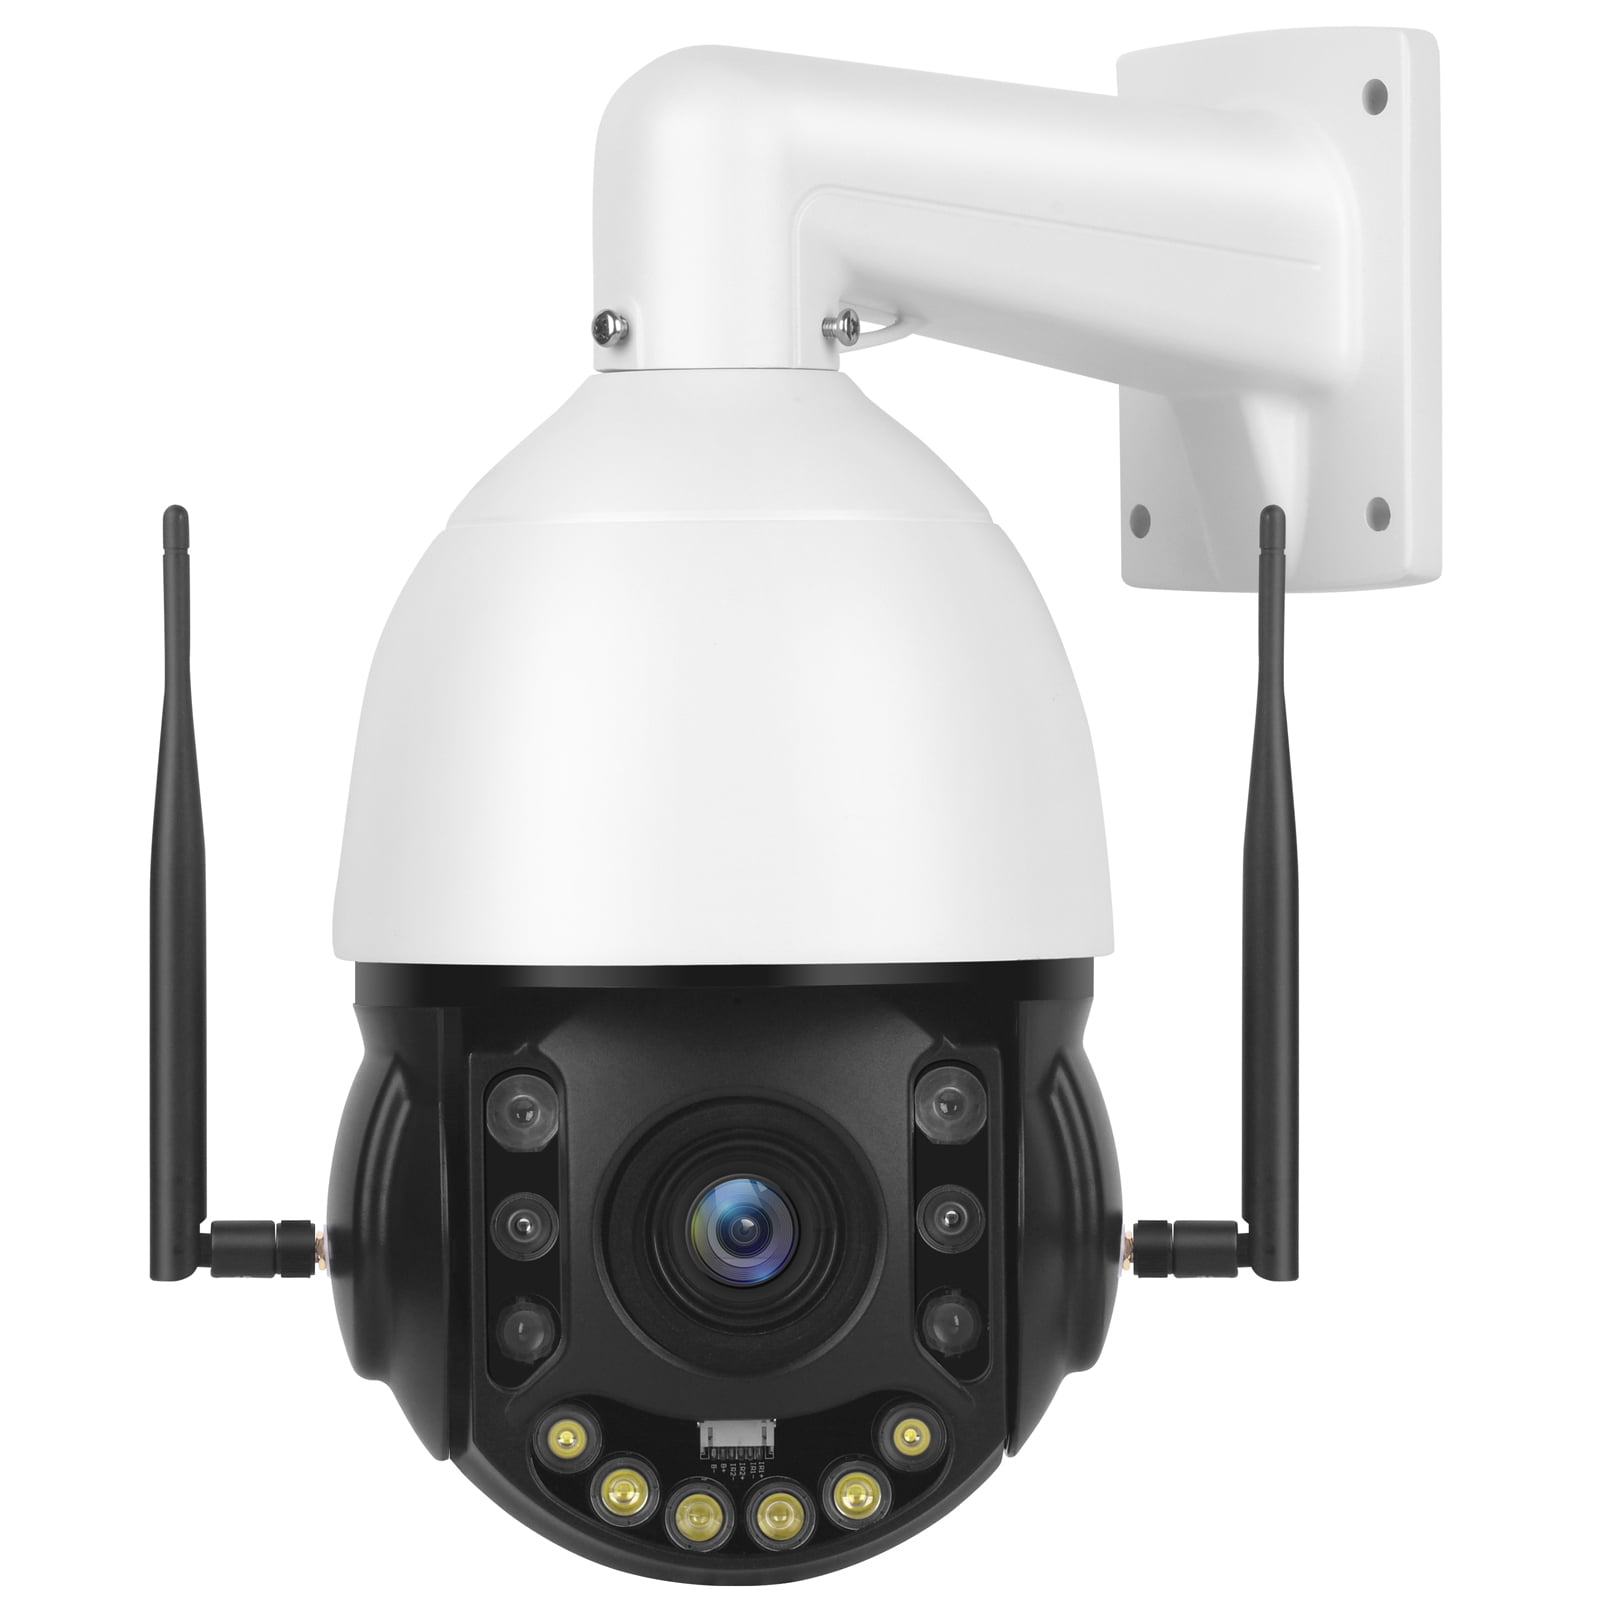 WiFi PTZ Outdoor Security Camera with 30X Optical Zoom, 2K HD Color/IR Starlight Night Vision, 2 Way Talk, Local/ Cloud Storage - Walmart.com